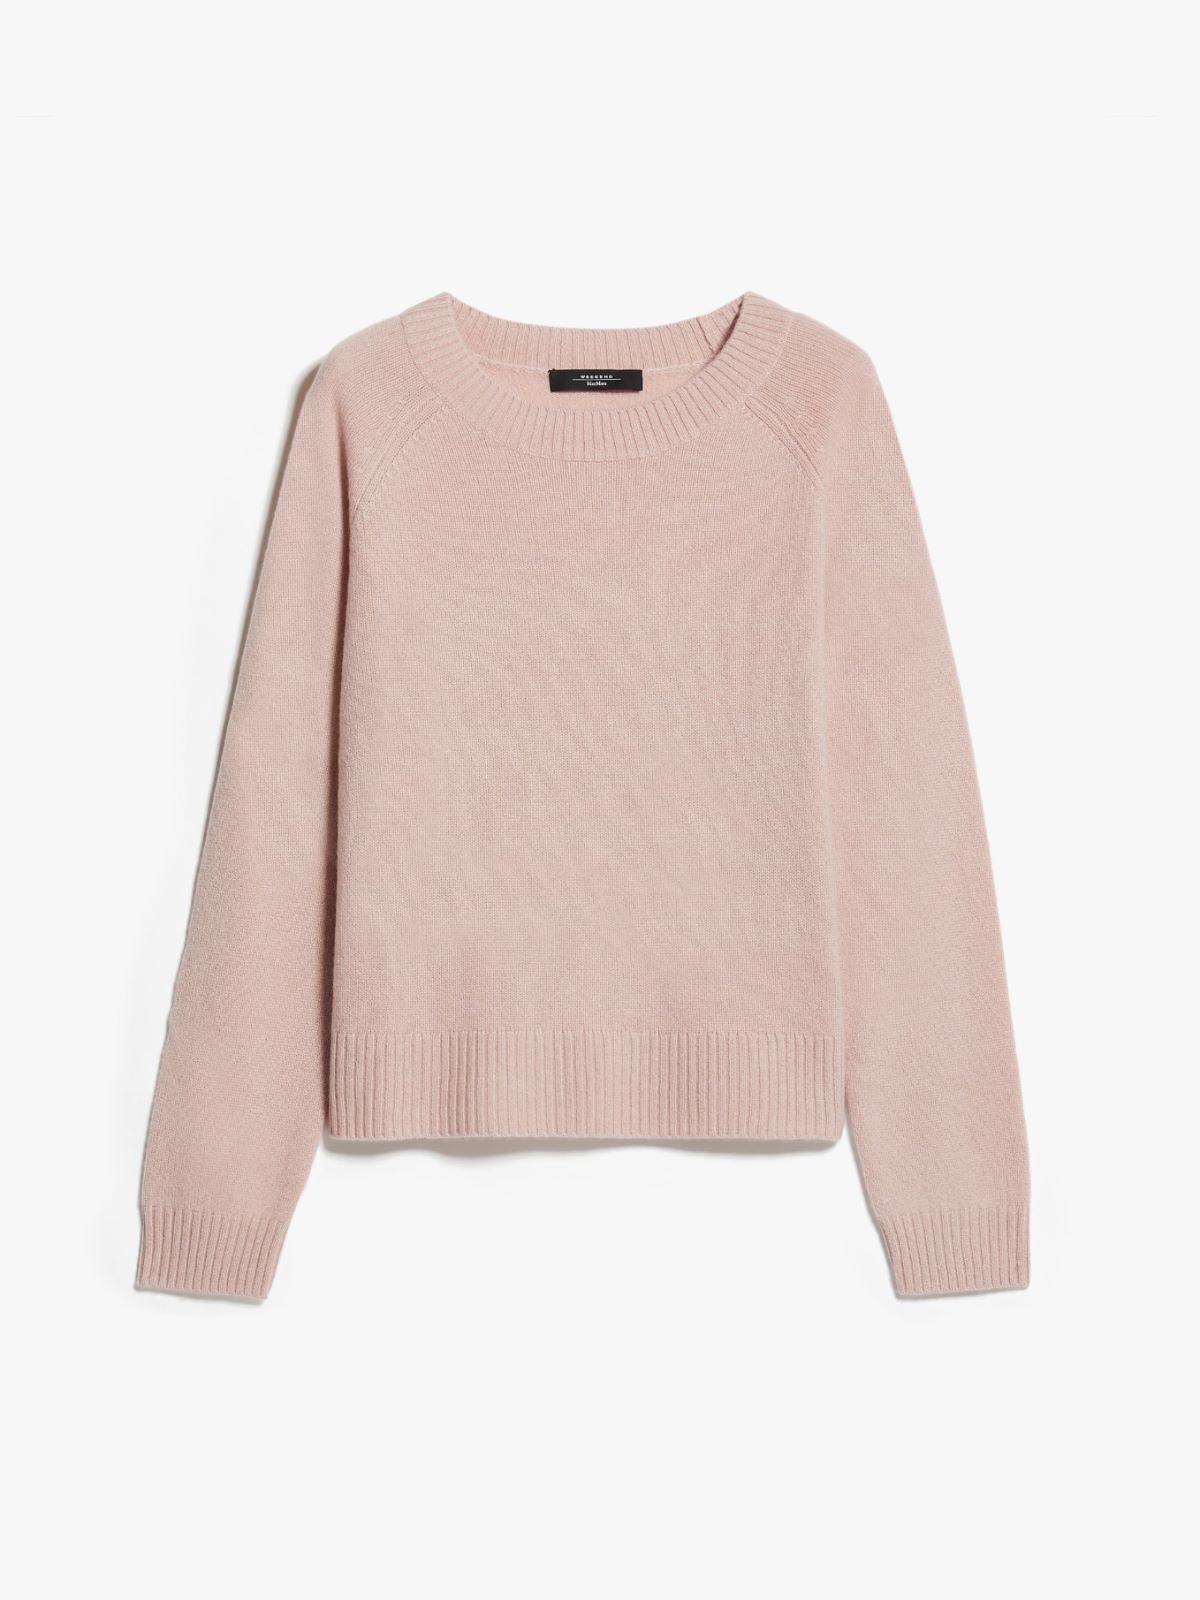 Cashmere sweater - PINK - Weekend Max Mara - 6